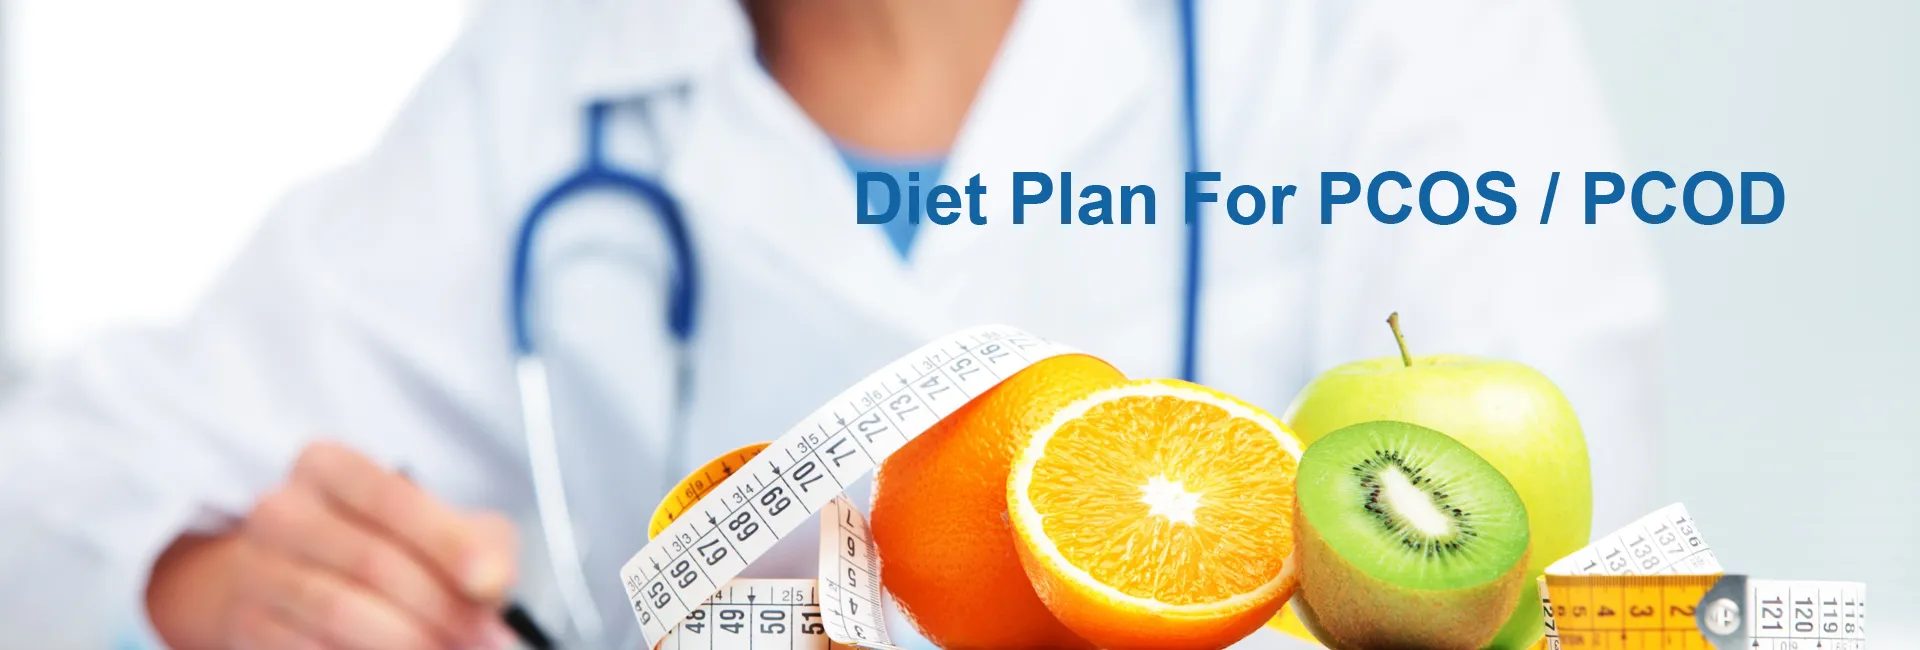 Diet Plan For PCOS / PCOD In Umm Al-quwain